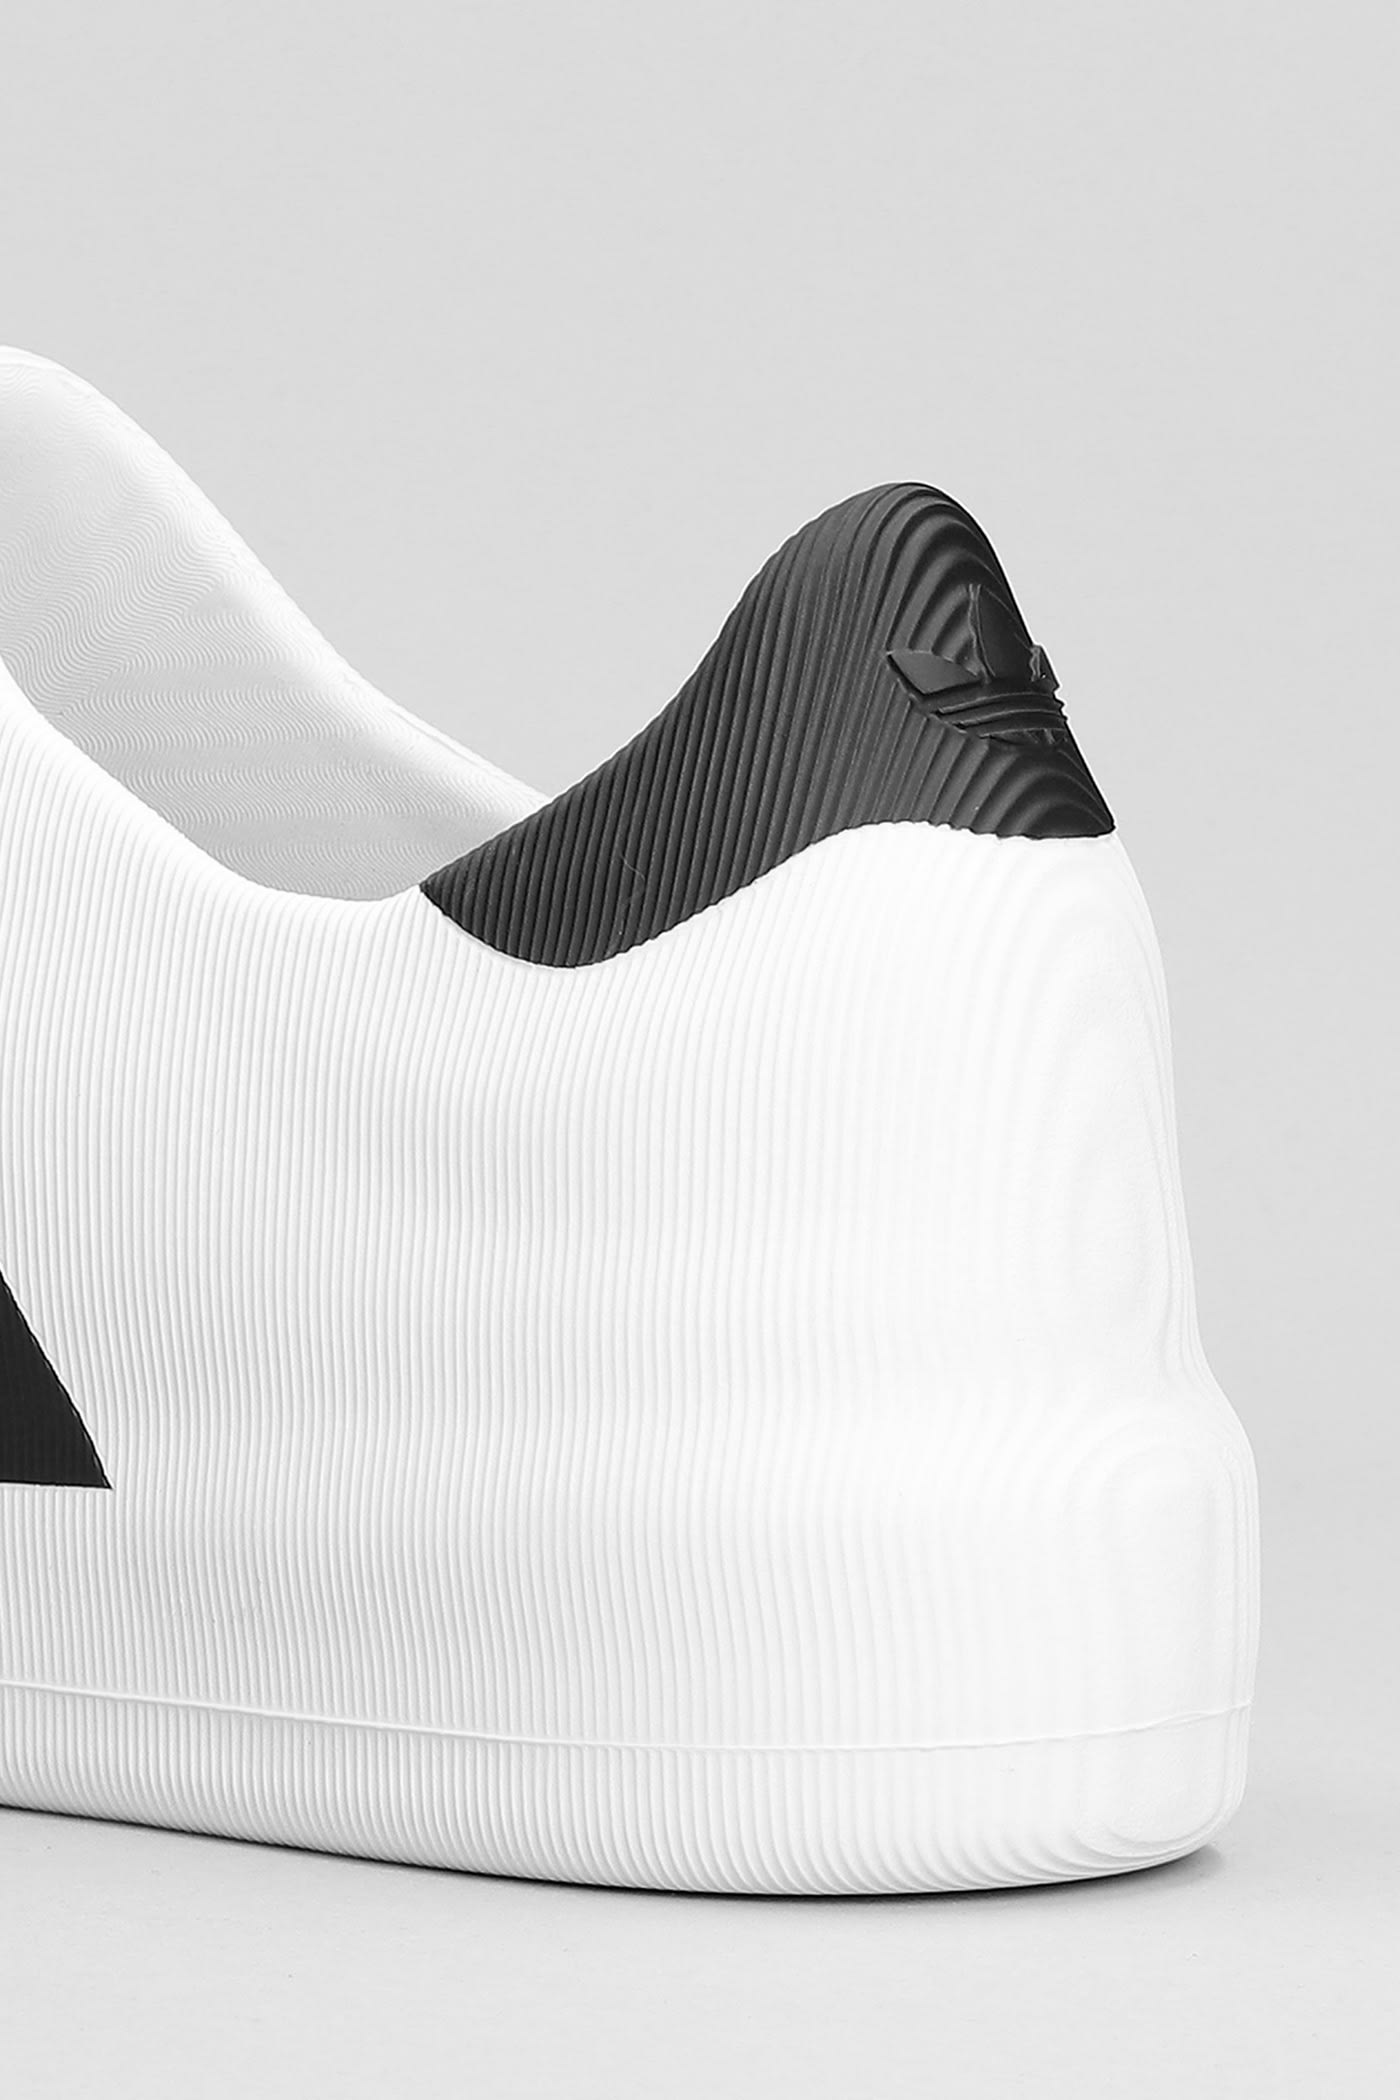 Shop Adidas Originals Adifom Superstar Sneakers In White Pvc